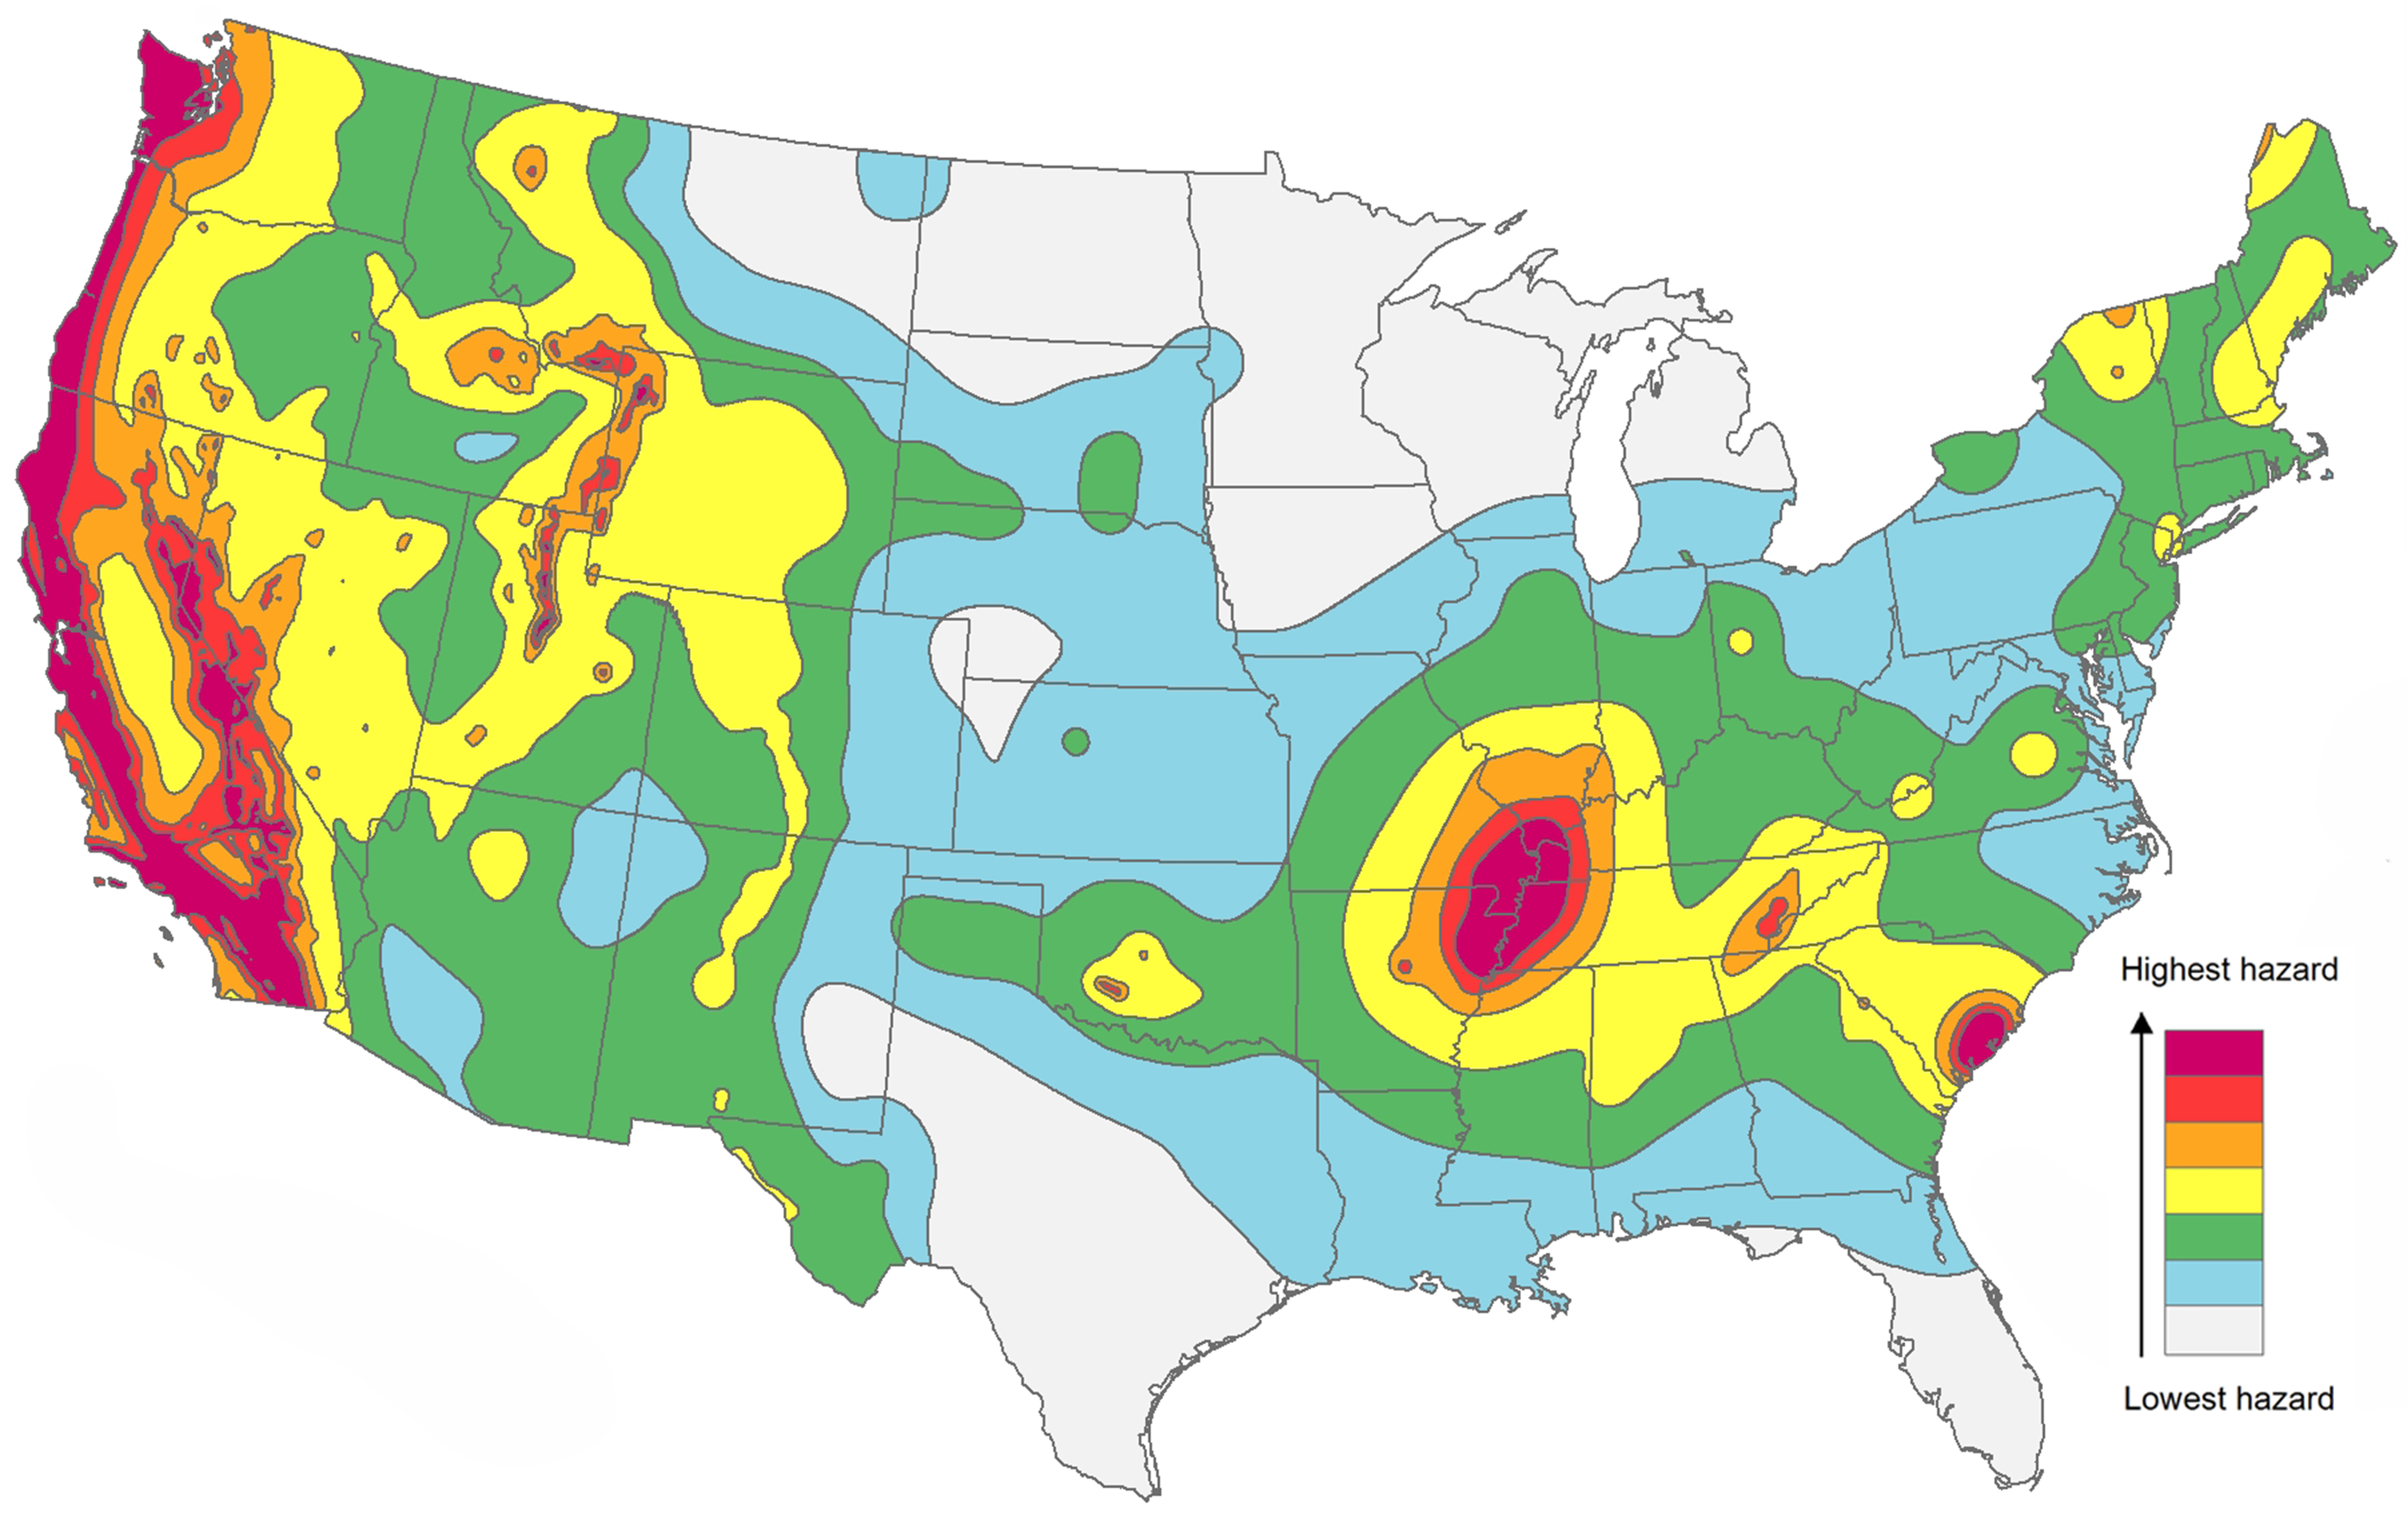 2018 USGS earthquake hazard map